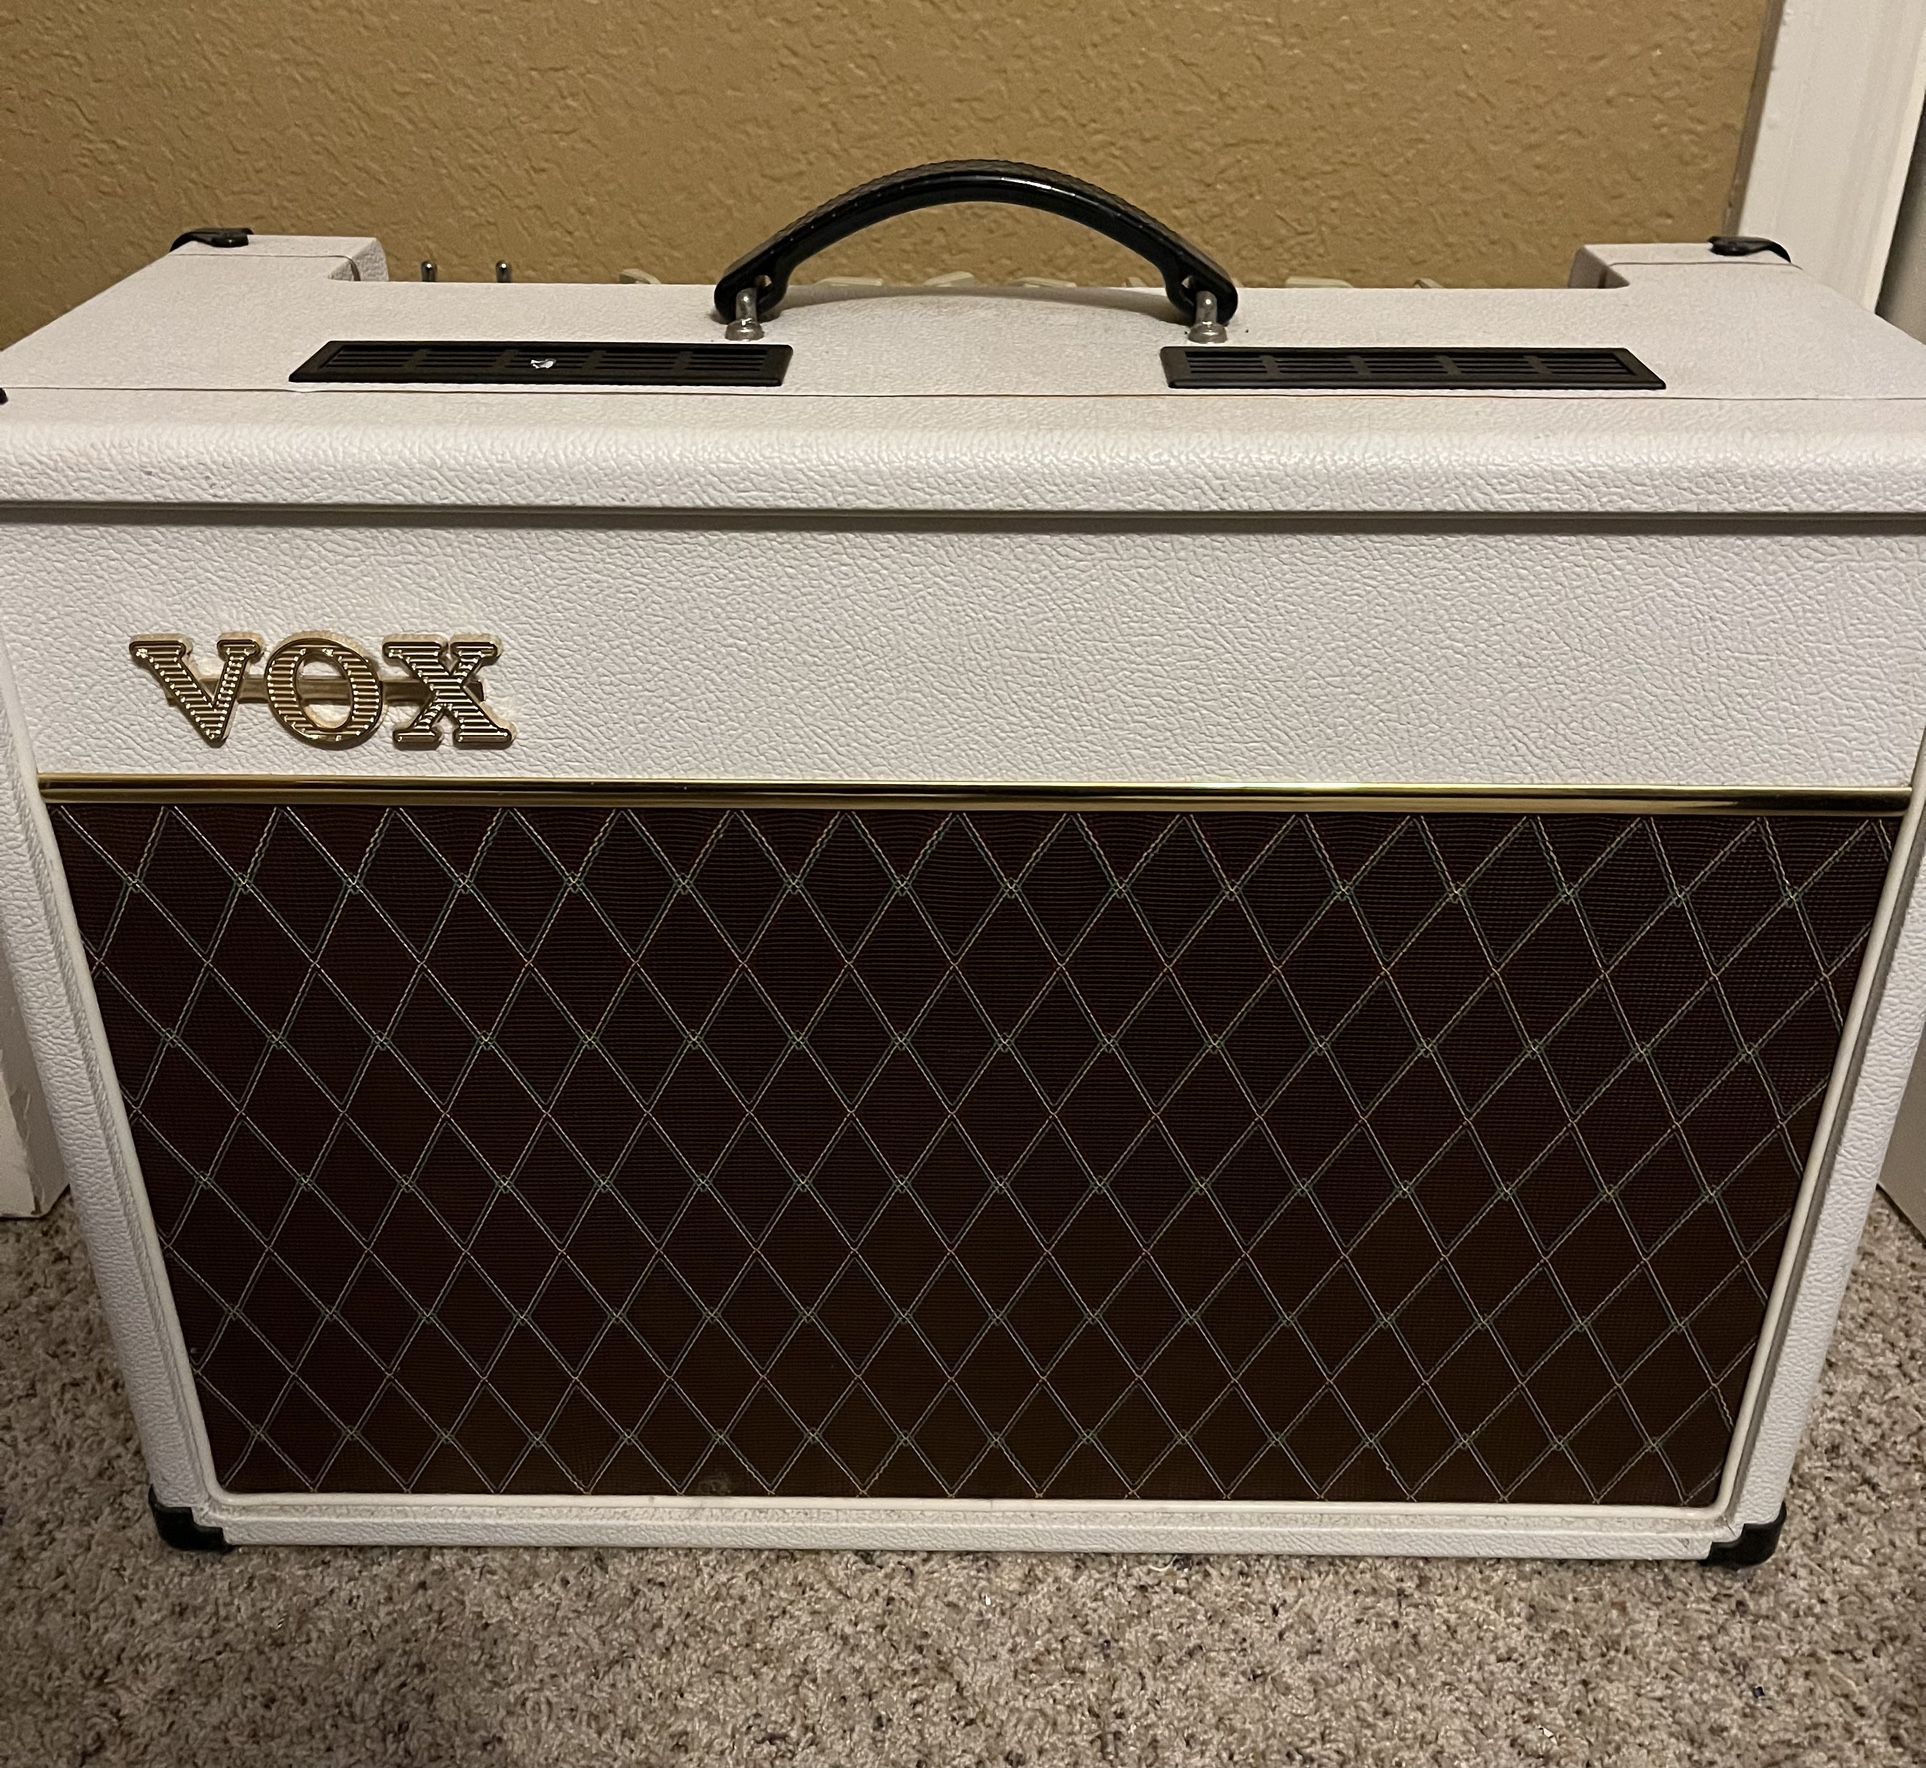 Vox AC15C1-WB Limited Edition Custom 2-Channel 15-Watt 1x12" Guitar Combo - White Bronco